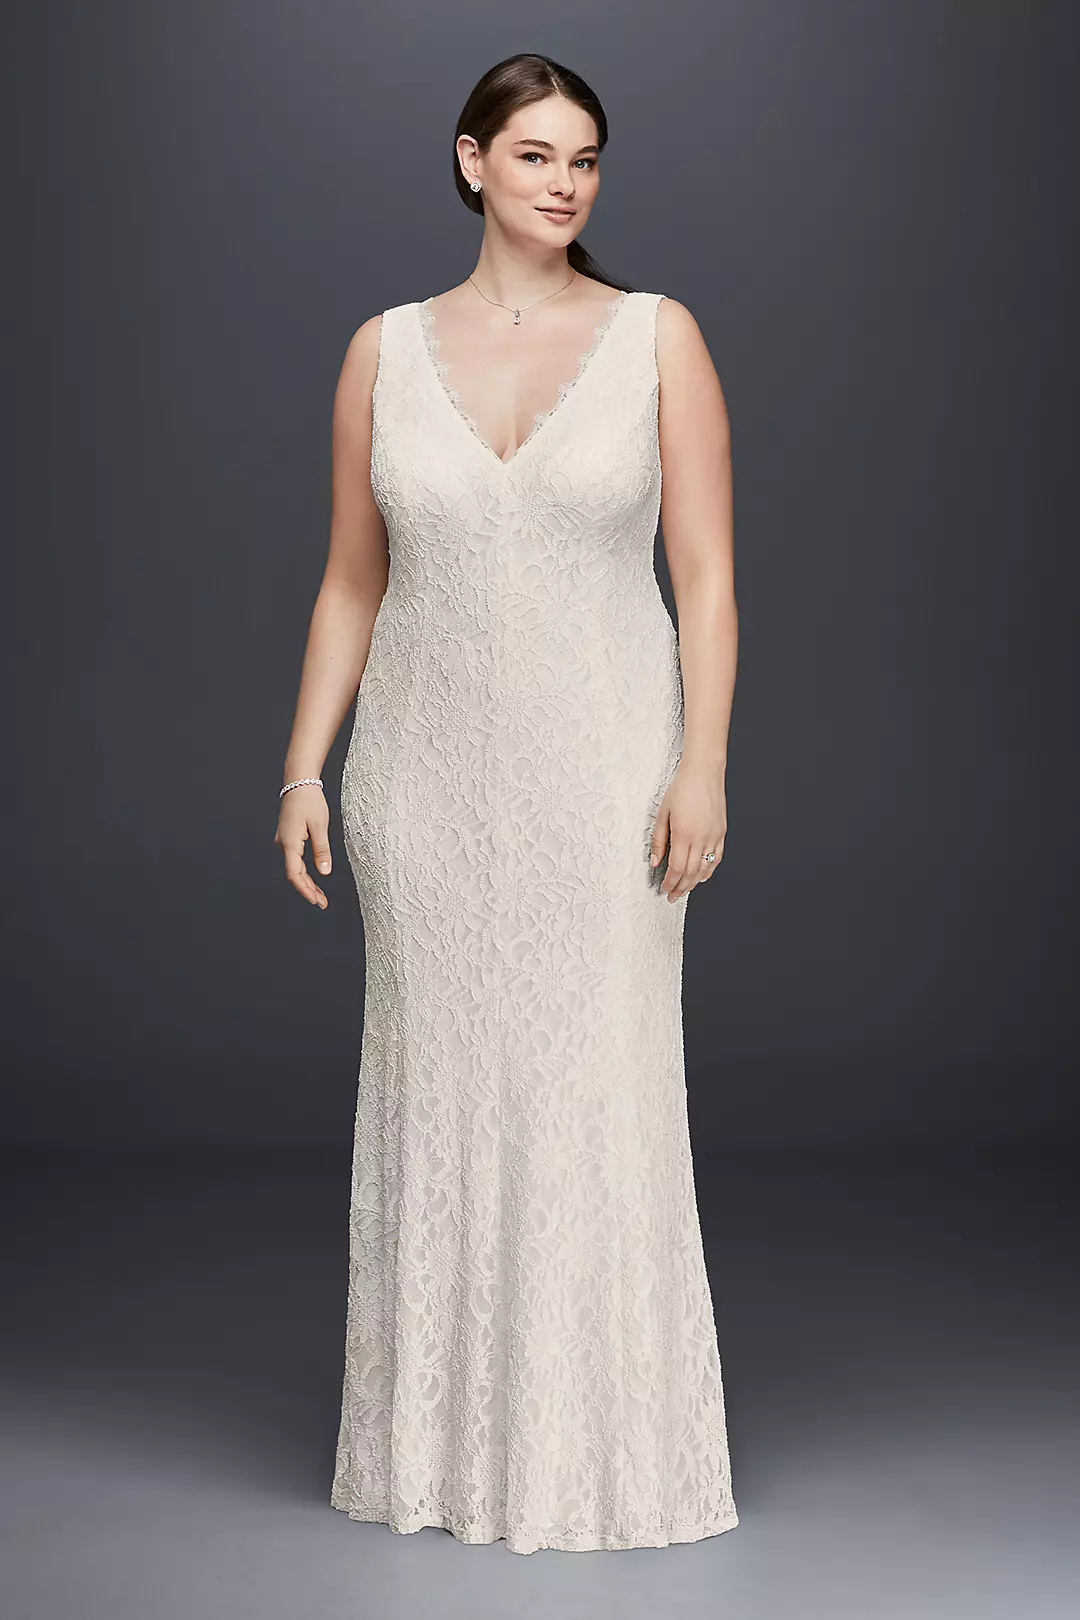 Allover Lace V-Neck Sheath Wedding Dress Image 1